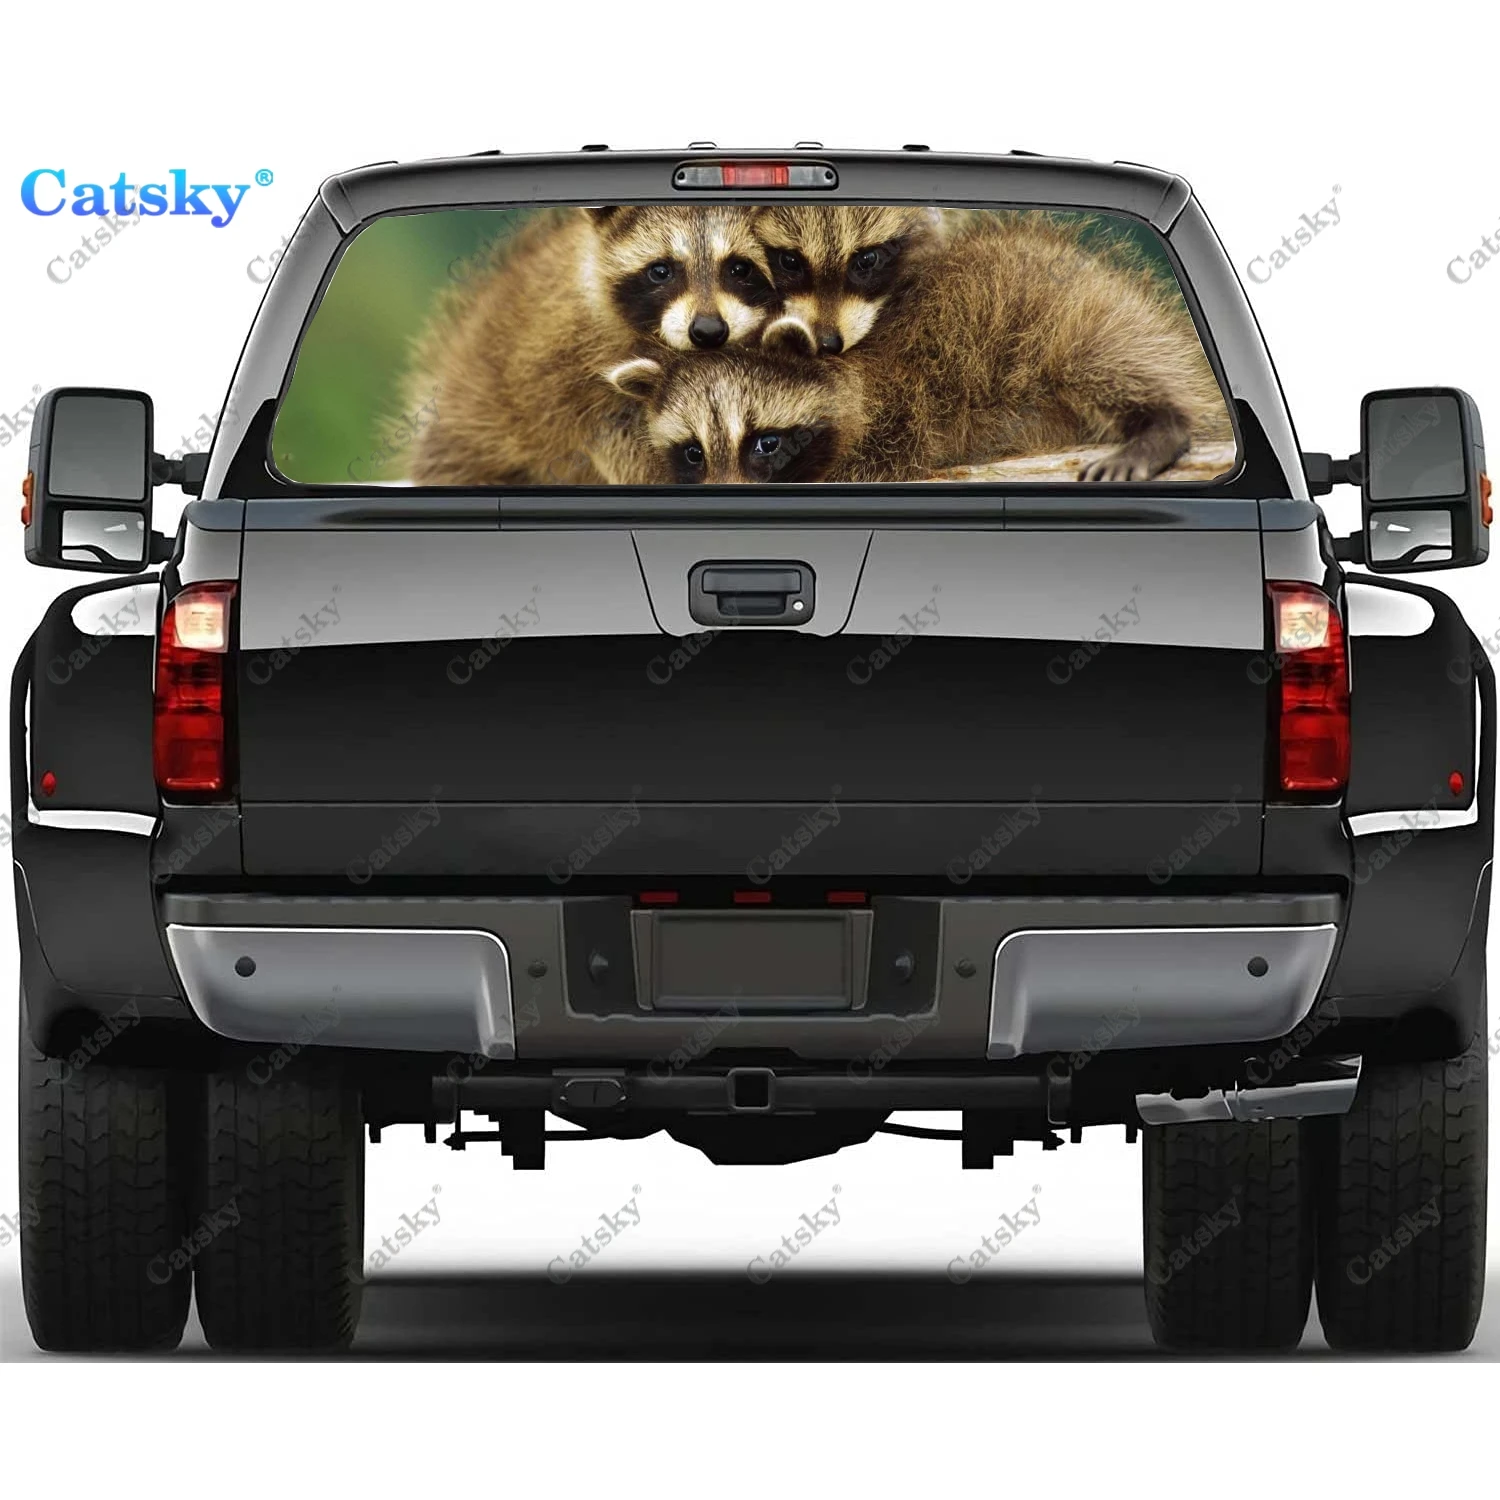 

Cute Raccoon Animal Car Rear Windshield Sticker Truck Window See Through Perforated Back Glass-Window Vinyl Decal Decoration